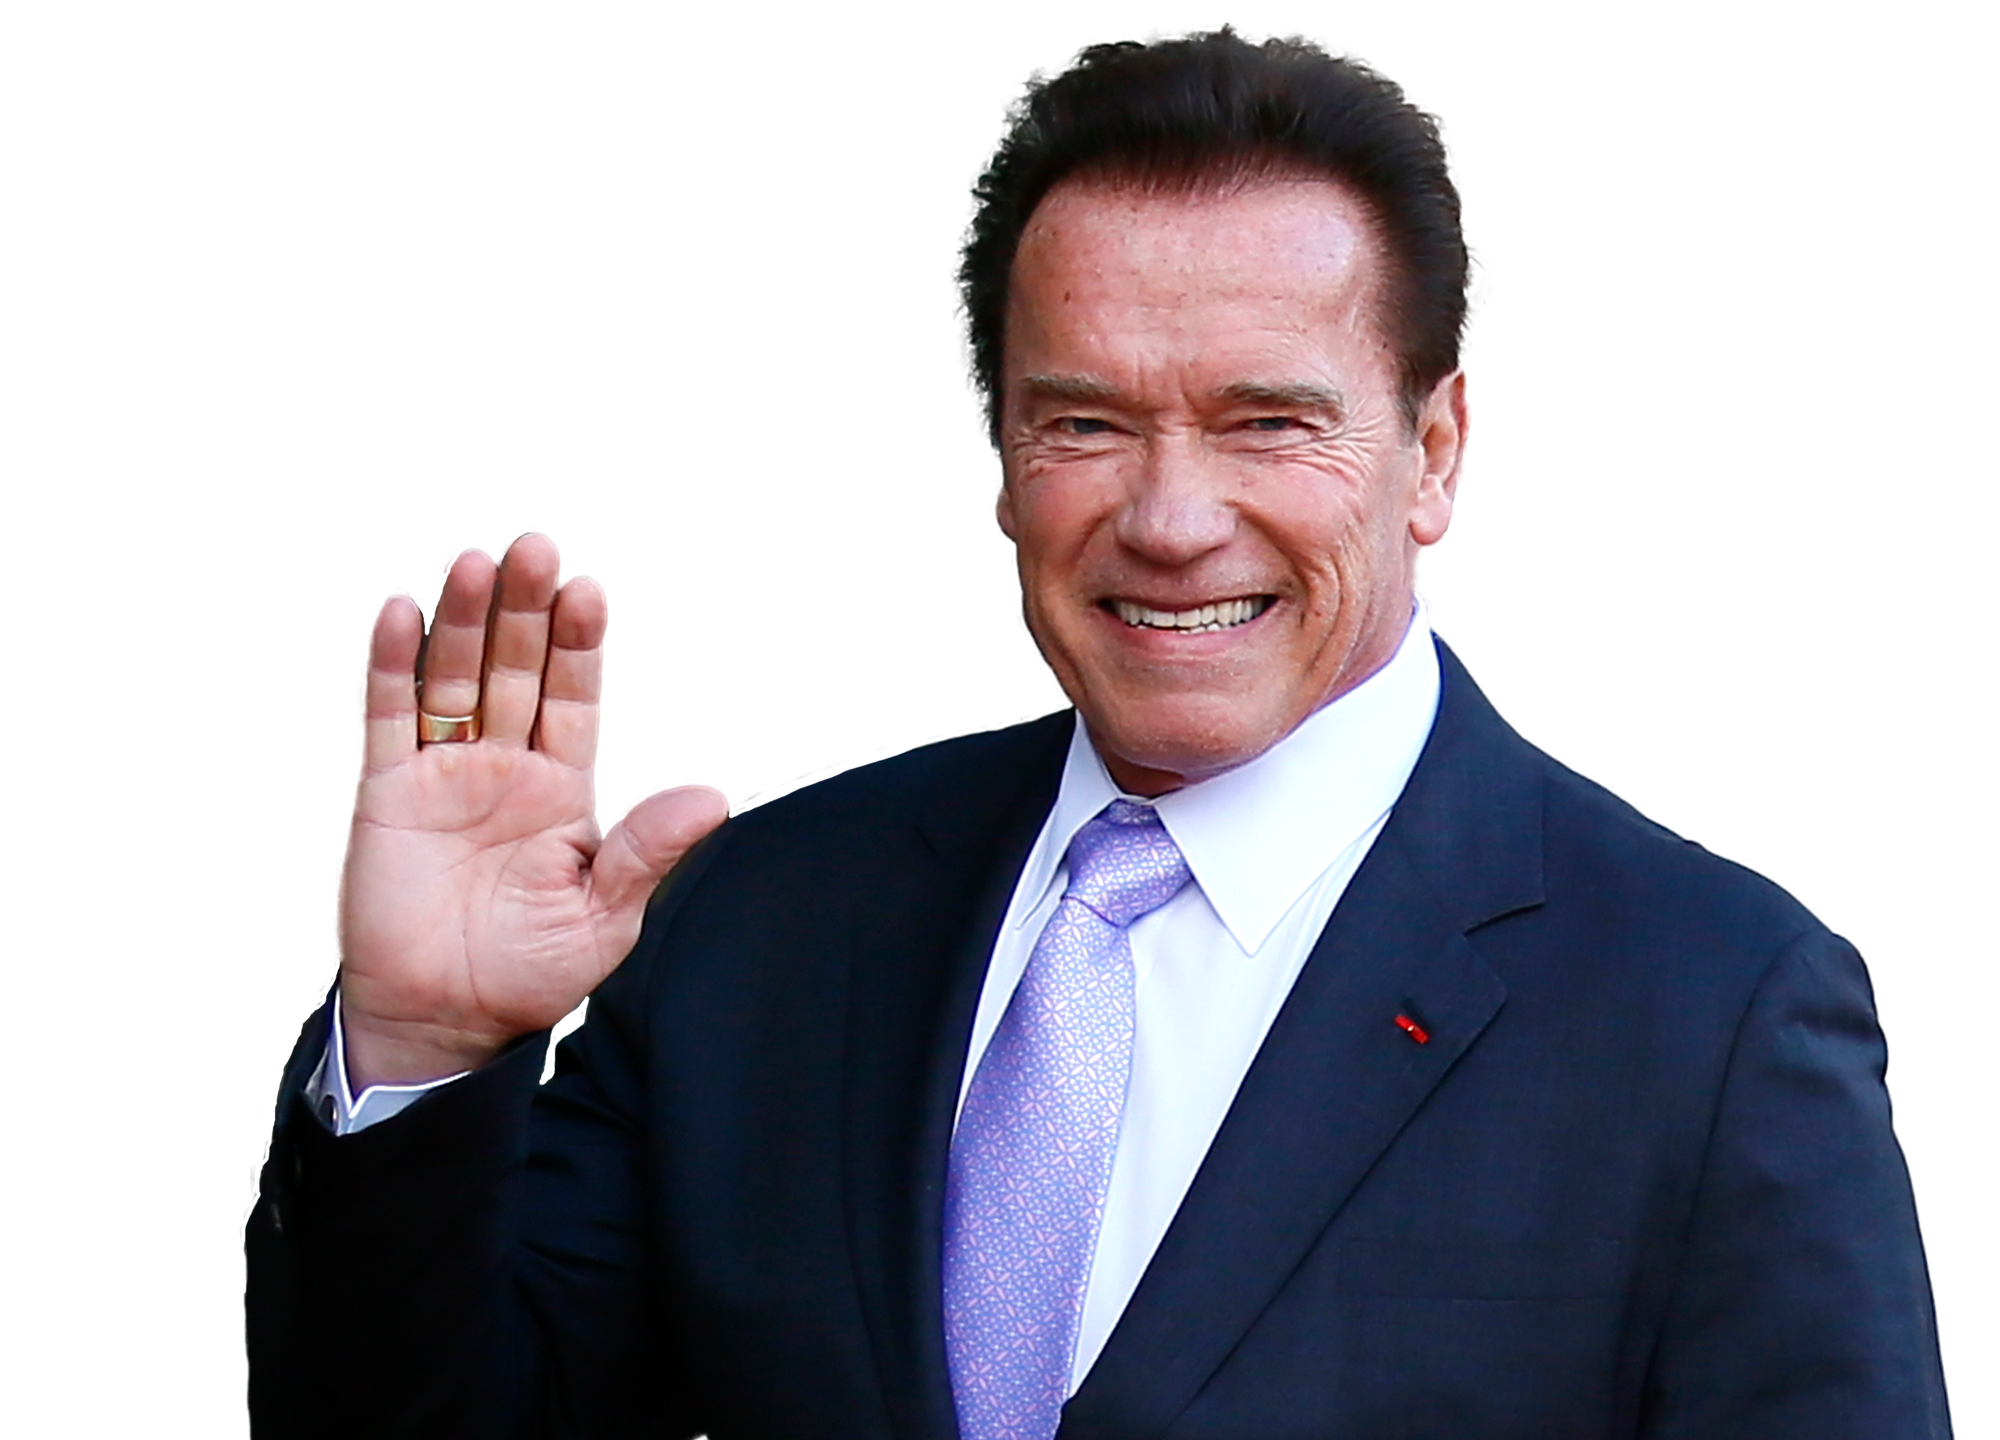 Arnold SchwarzeneGger PNG Image Transparente